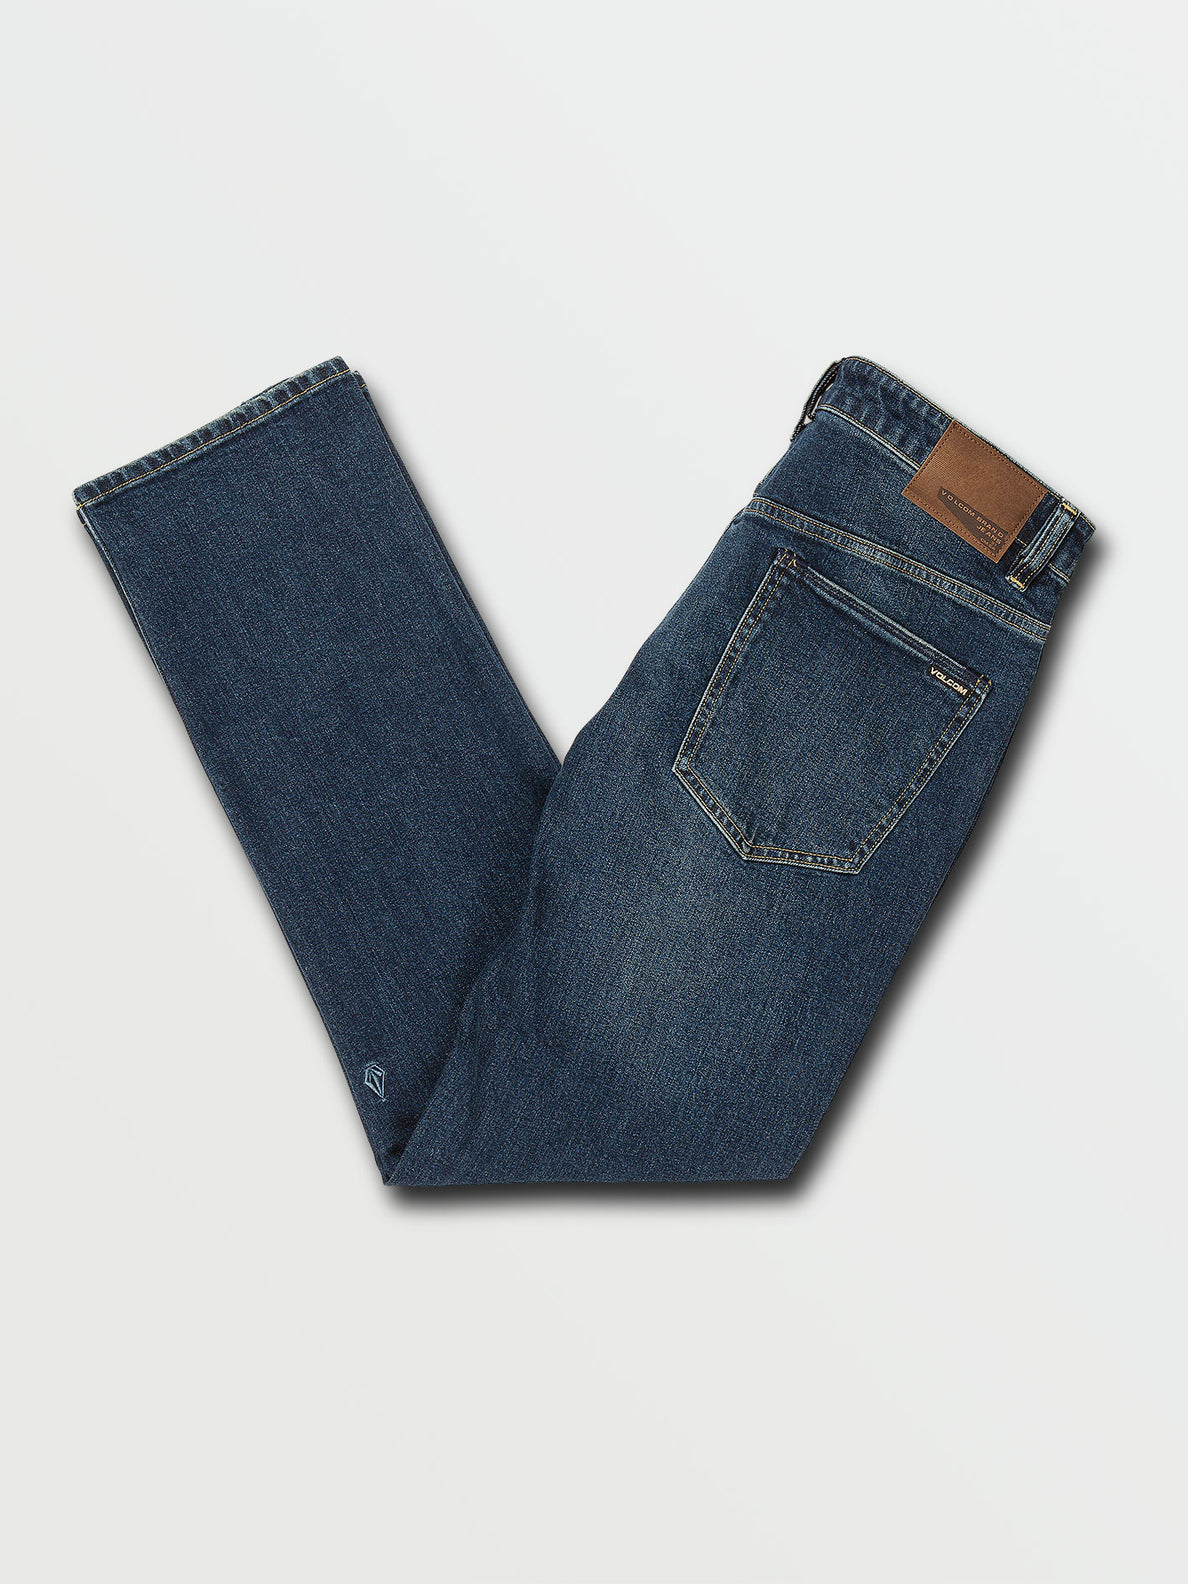 Solver Modern Fit Jeans - Medium Blue Wash (A1931503_MBW) [B]